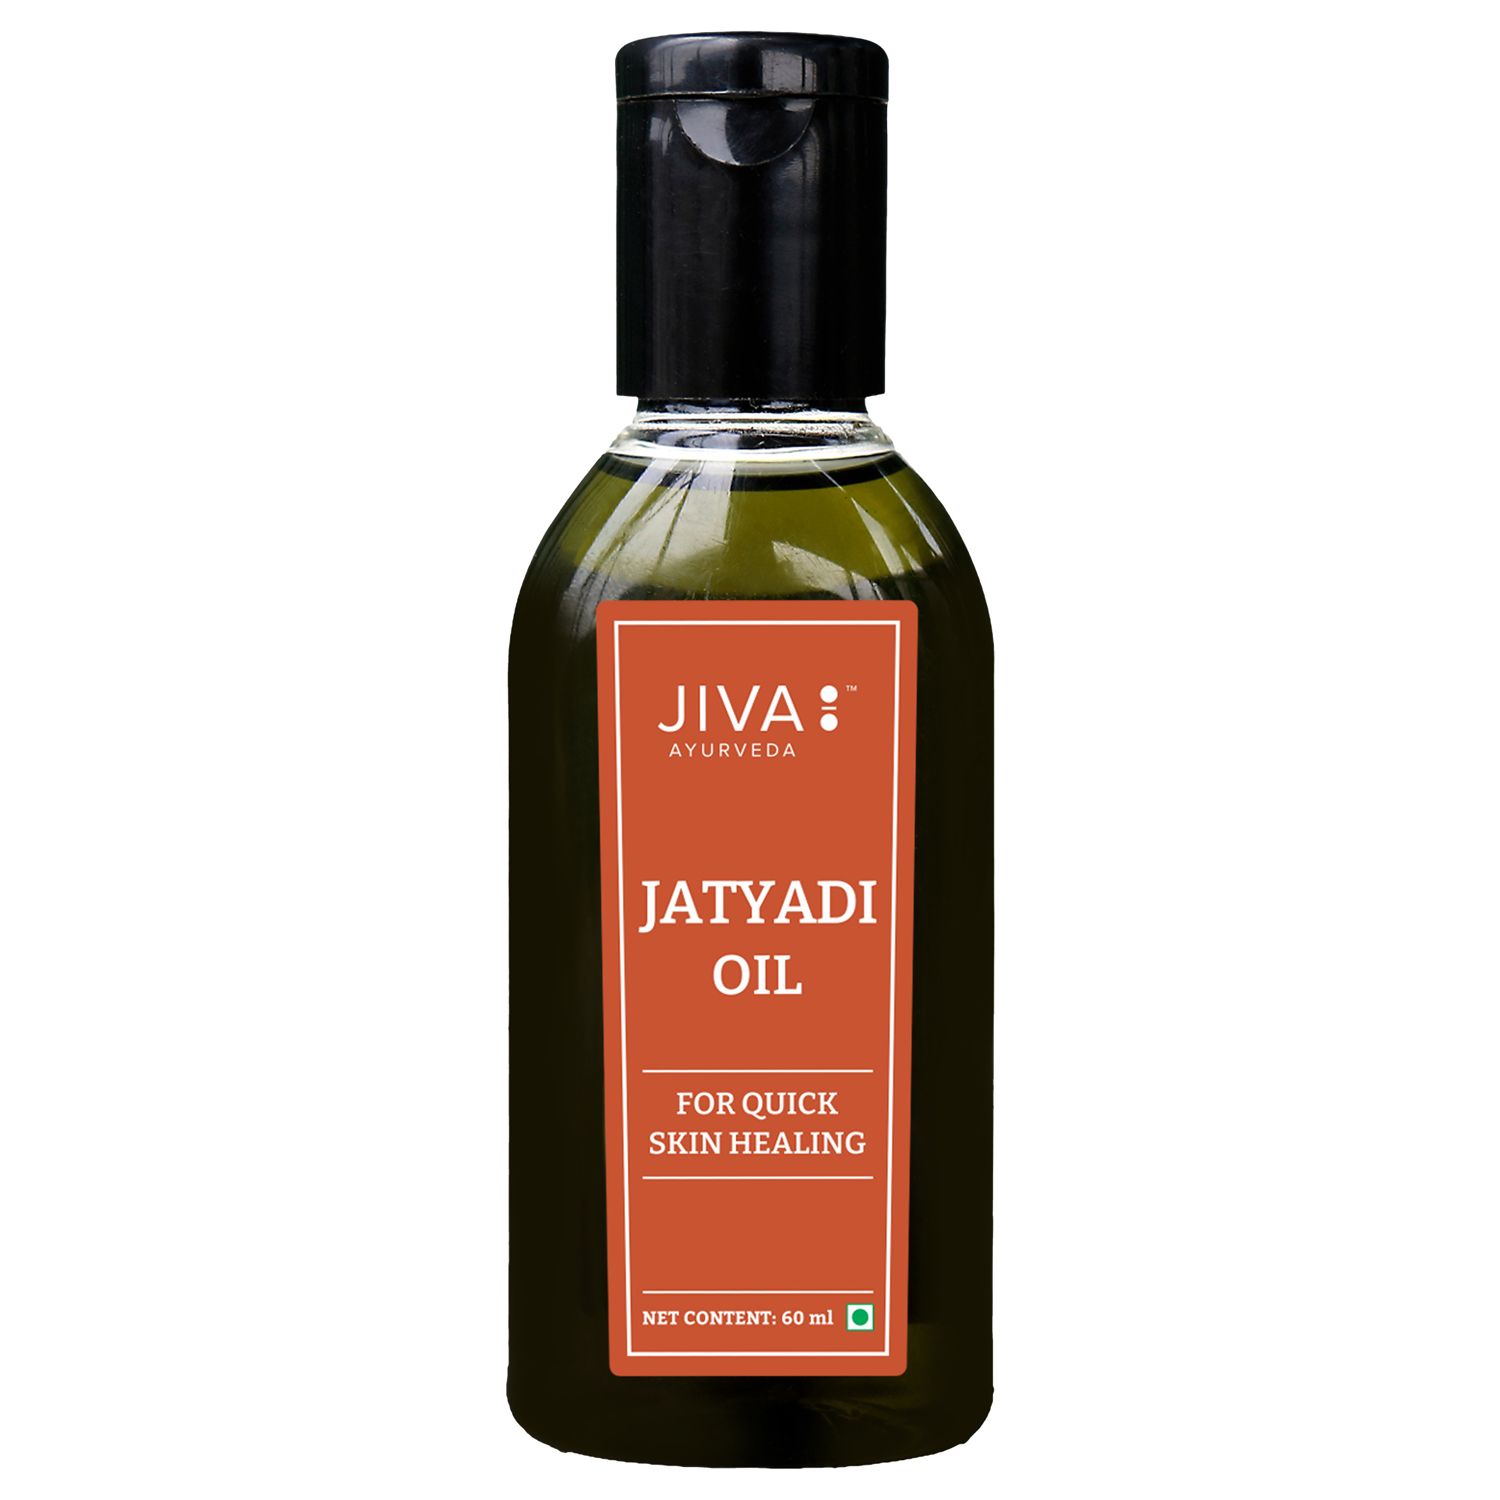 Buy Jiva Ayurveda Jatyadi Oil at Best Price Online